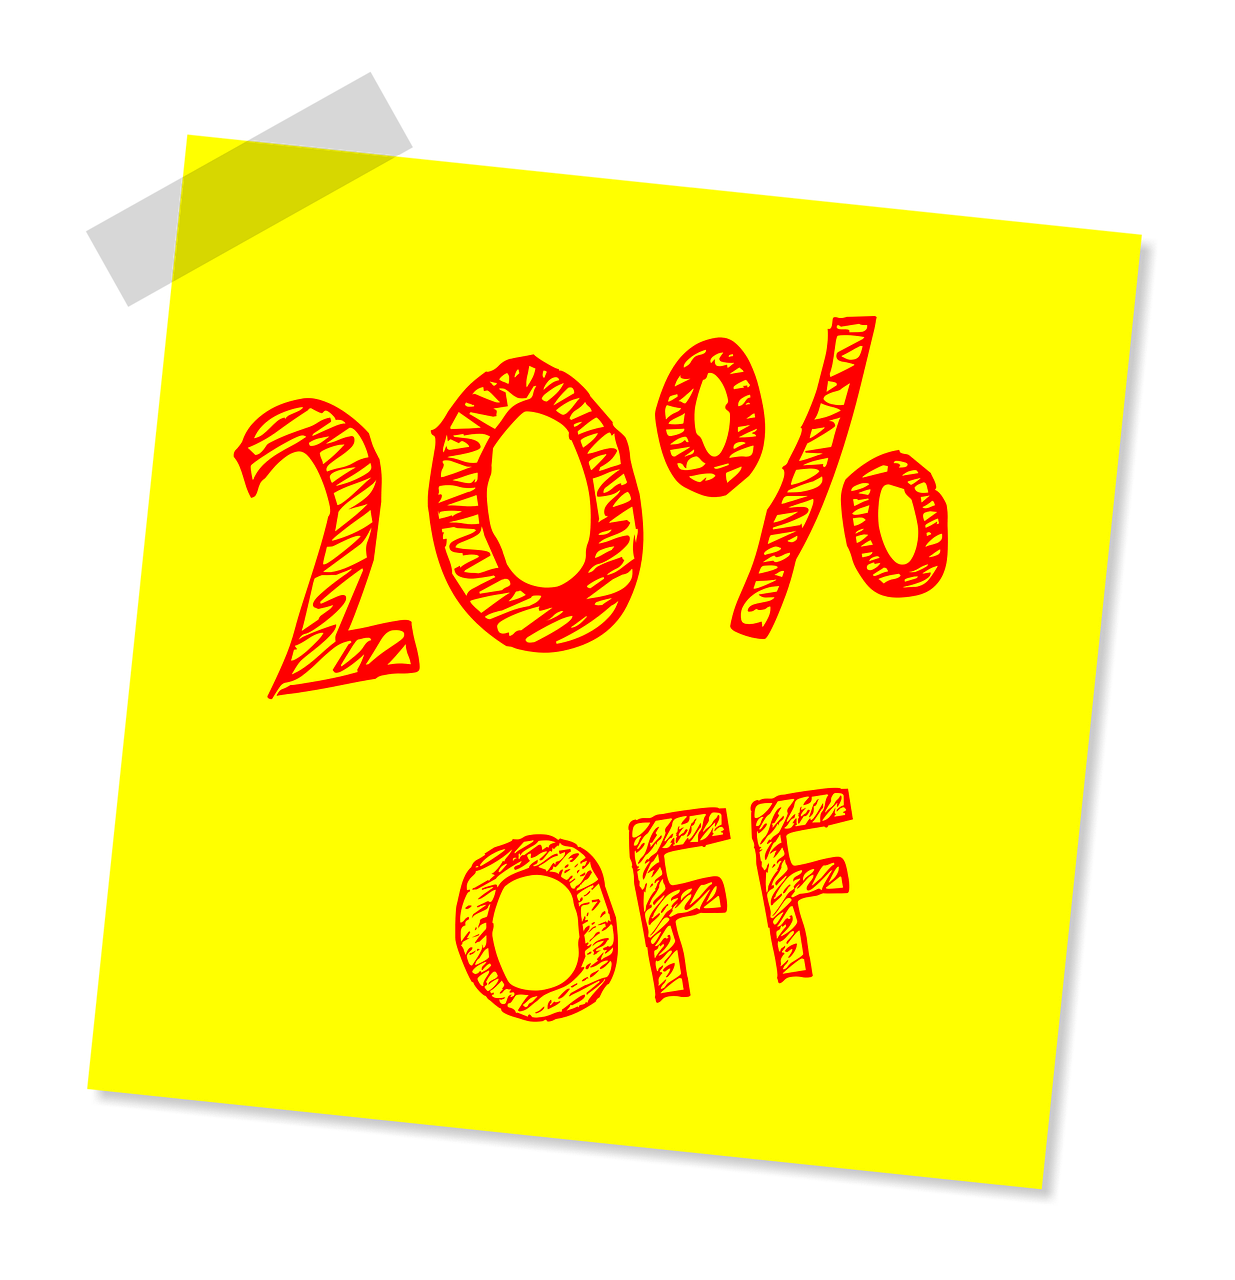 twenty percent off discount sale free photo